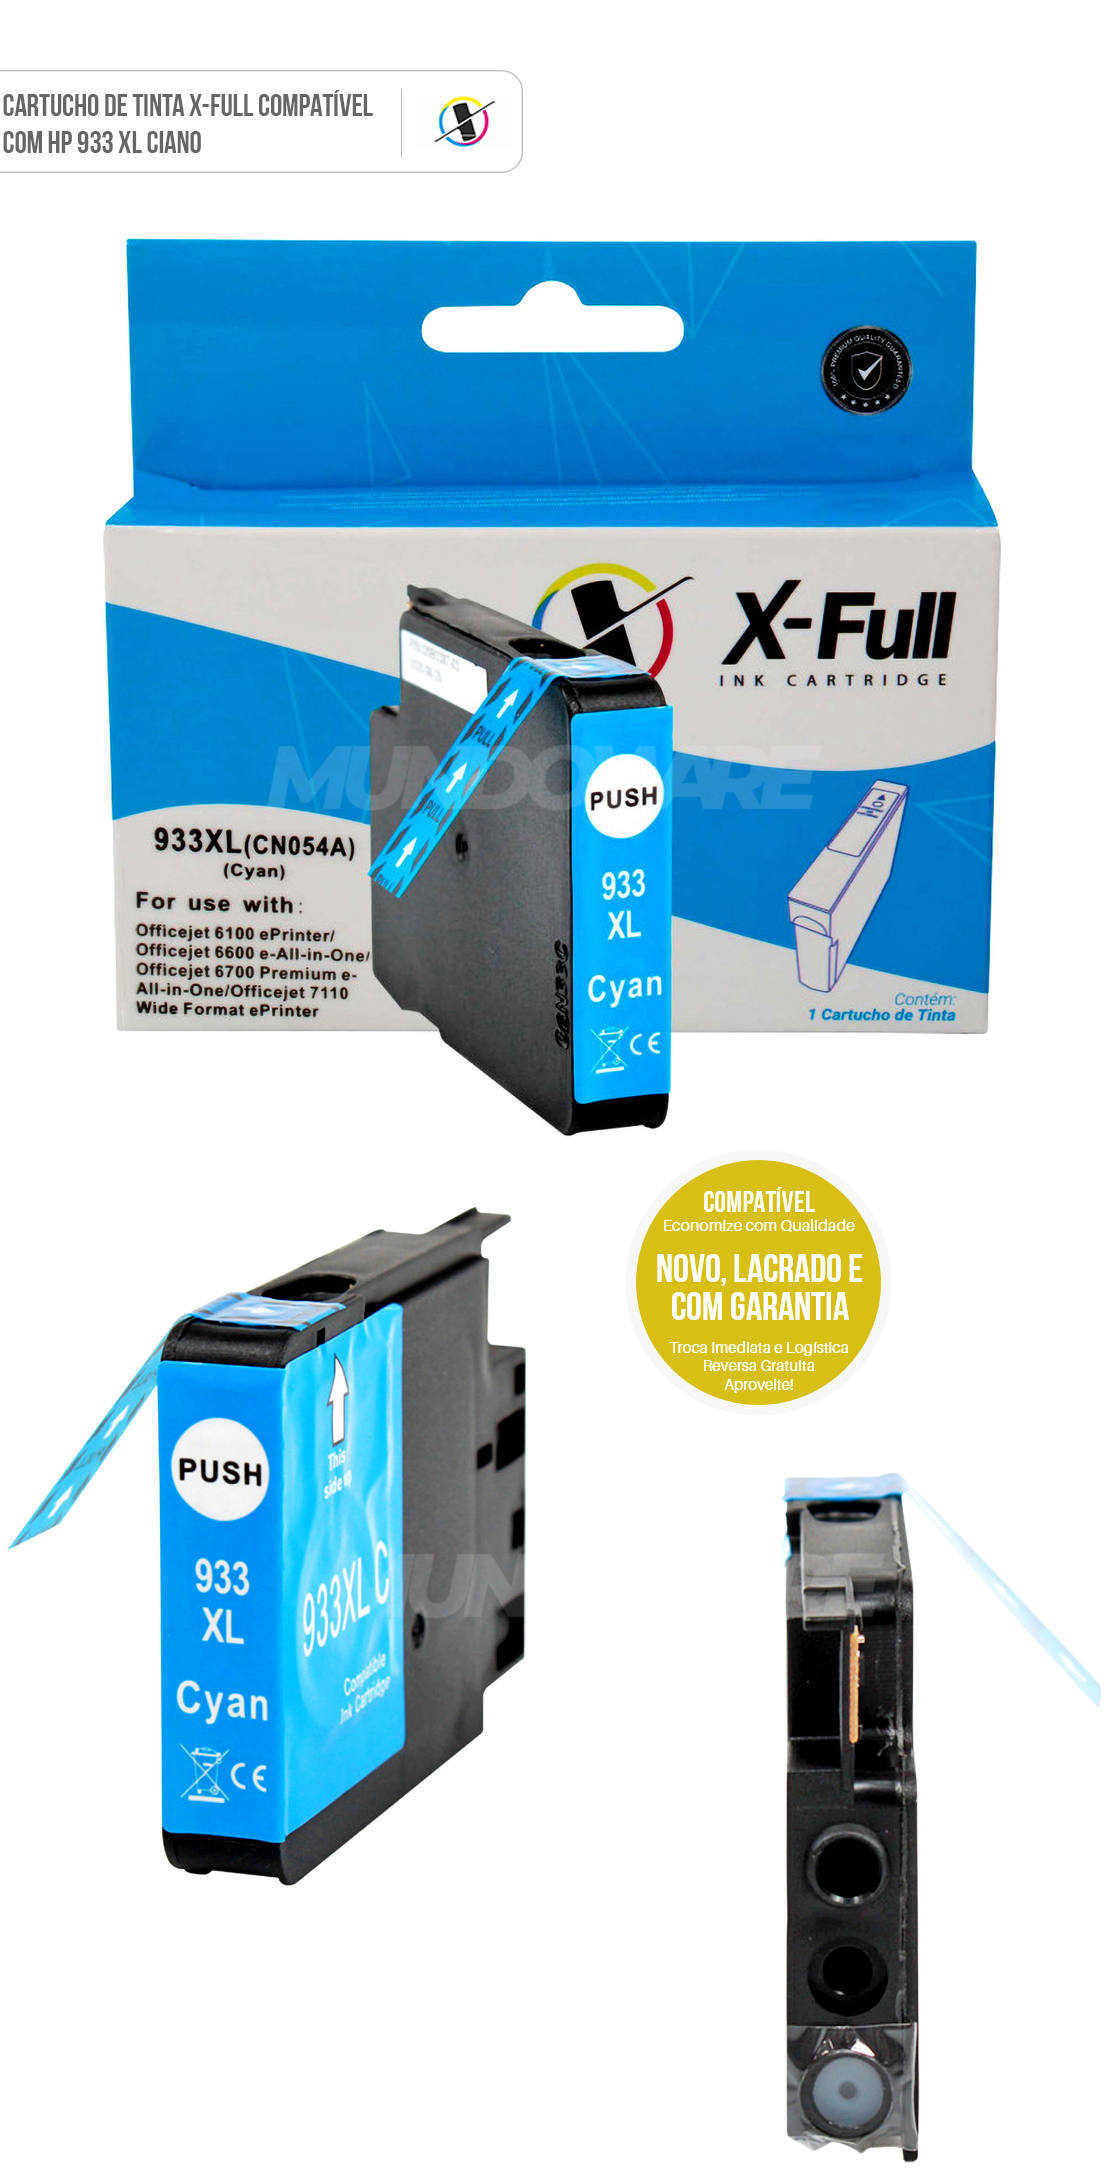 Cartucho de Tinta X-Full Compatível com HP 933xl 933 para Impressora 6100 6600 6700 7100A 7110 7510 7610 Ciano 17ml